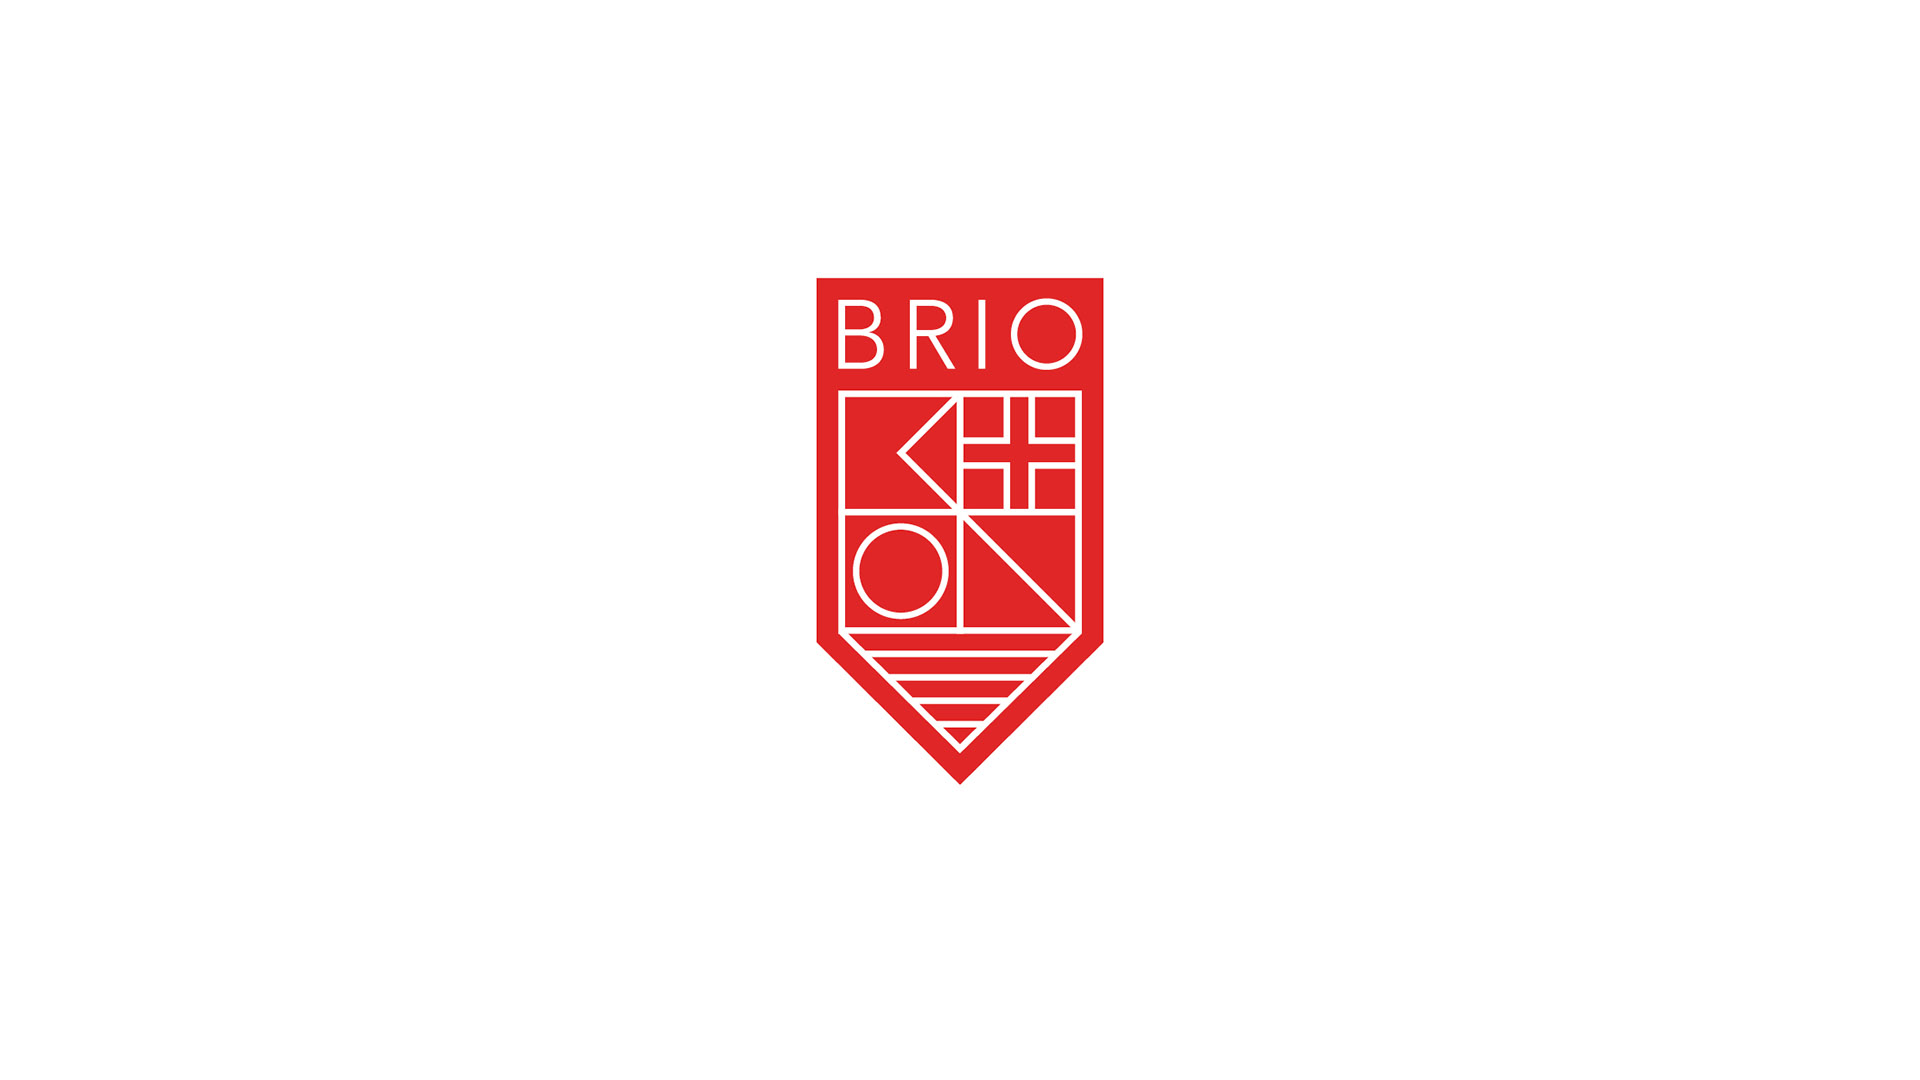 brio hingham red logo on white